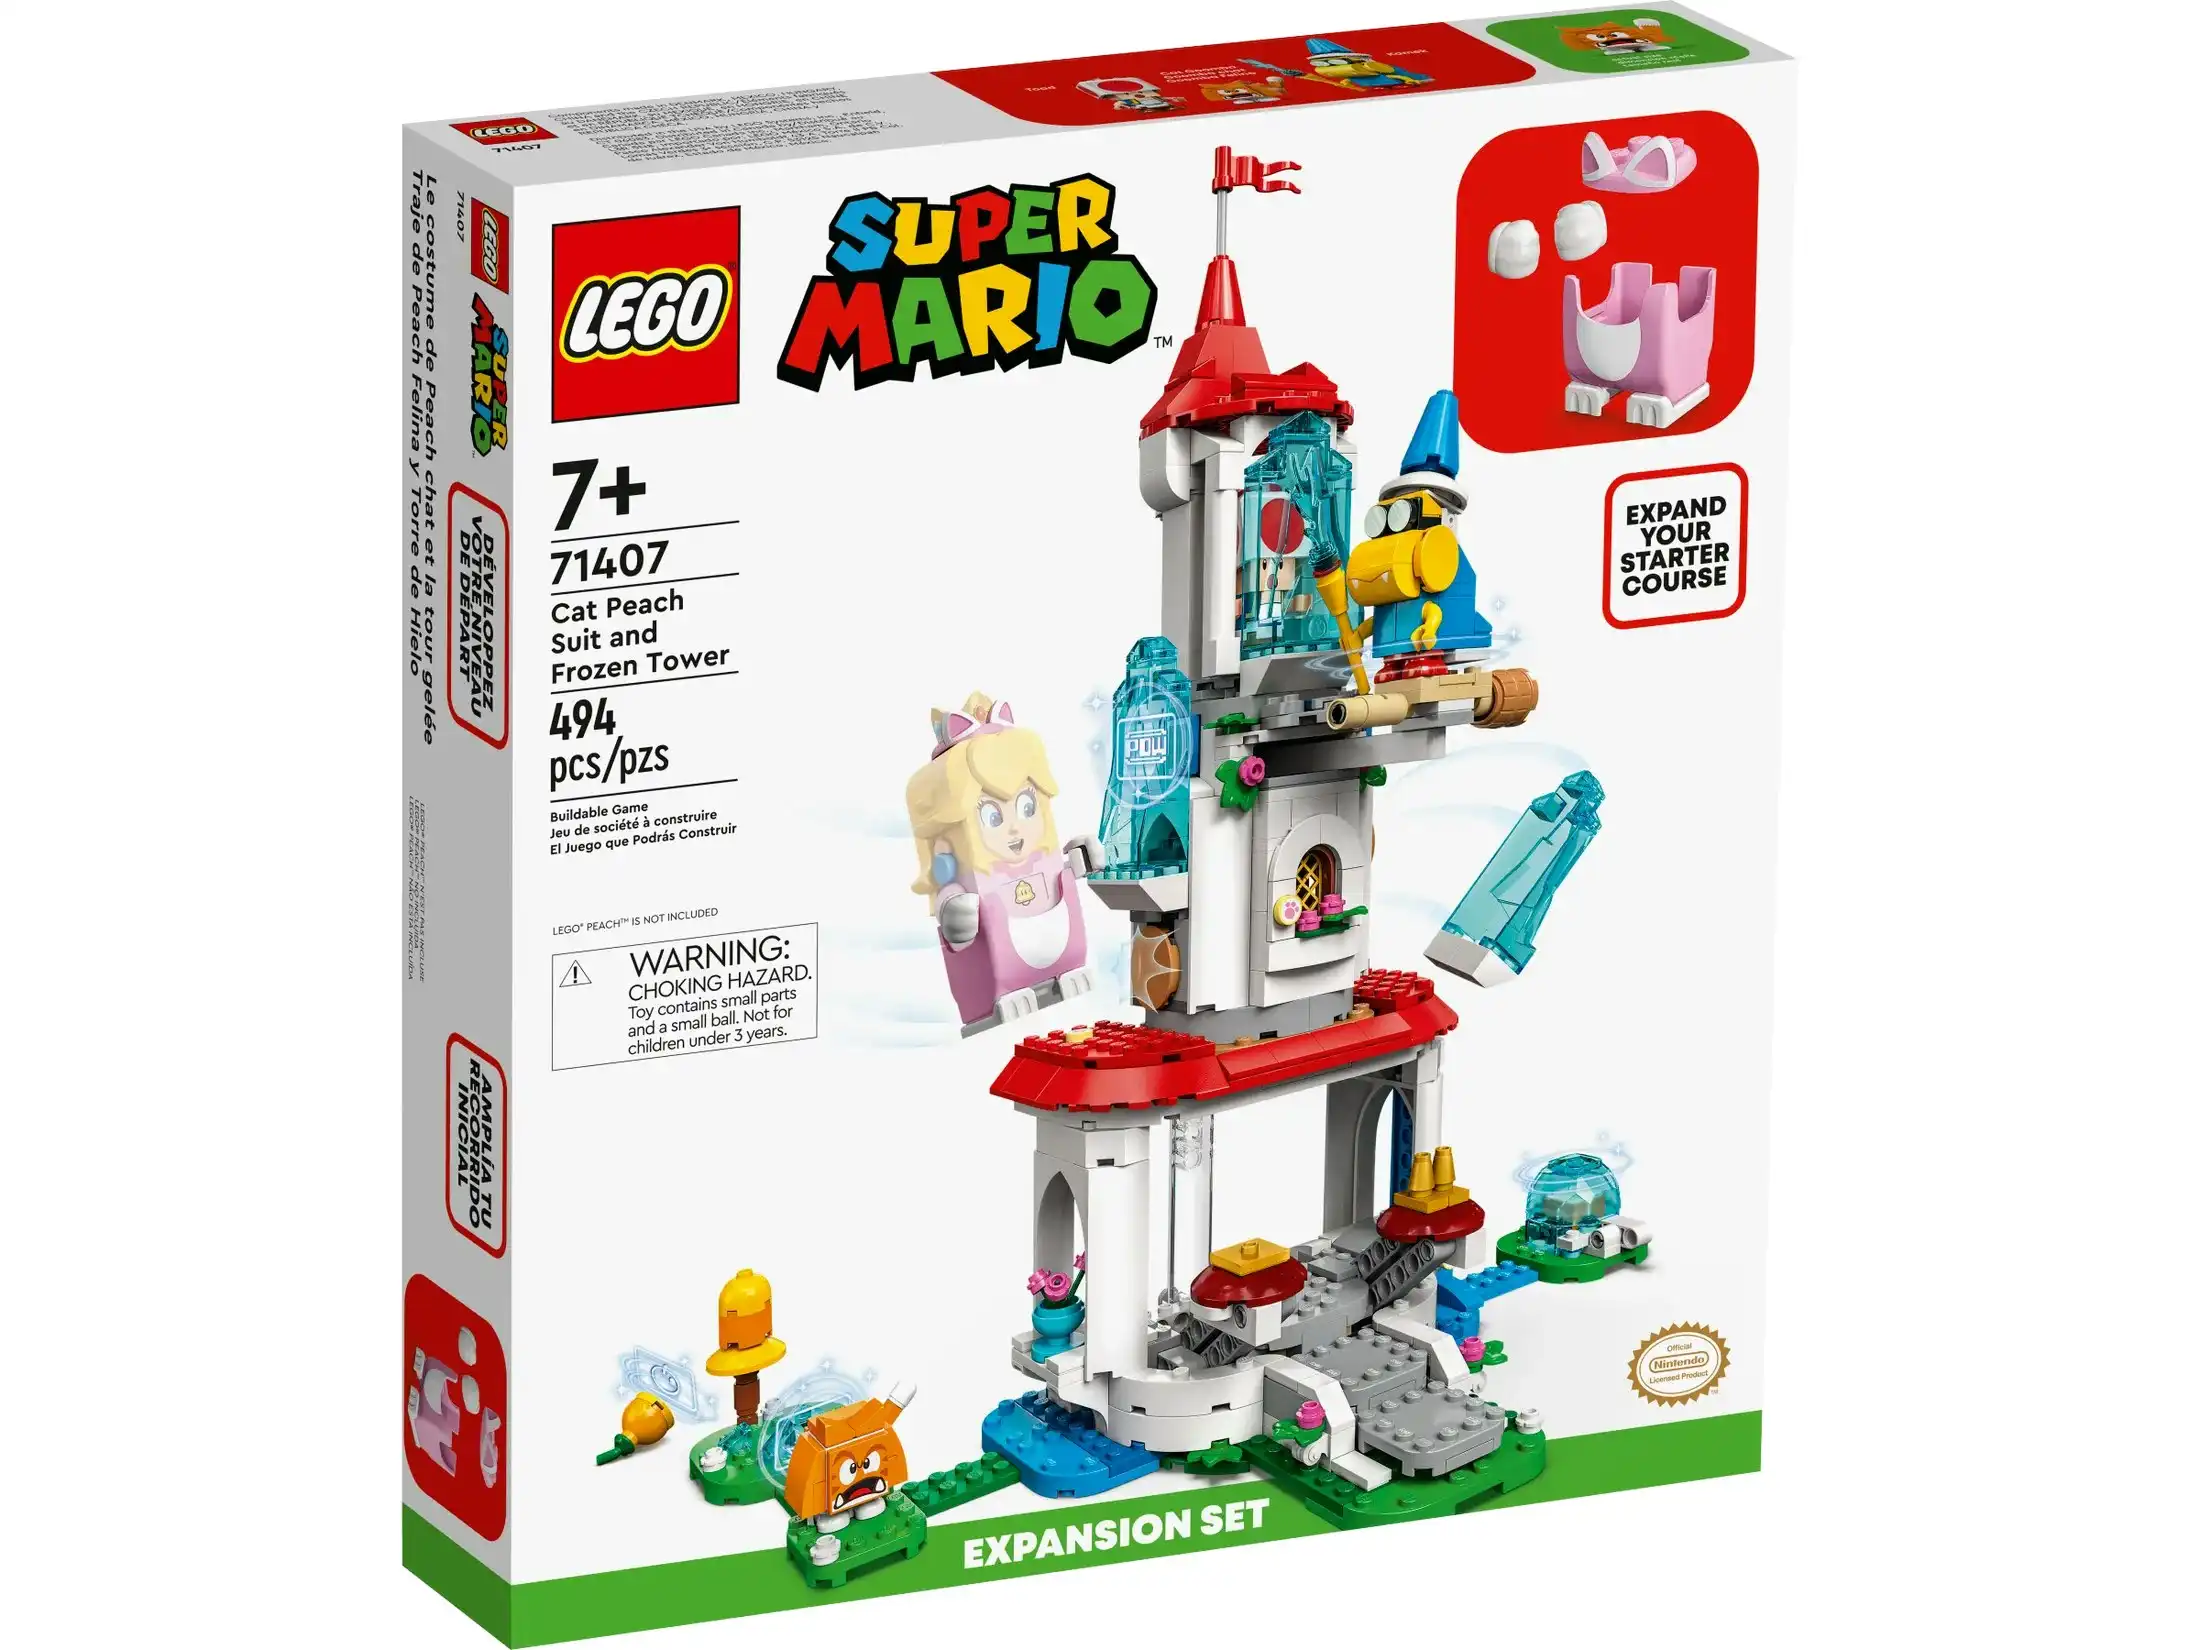 LEGO 71407 Cat Peach Suit and Frozen Tower Expansion Set - Super Mario